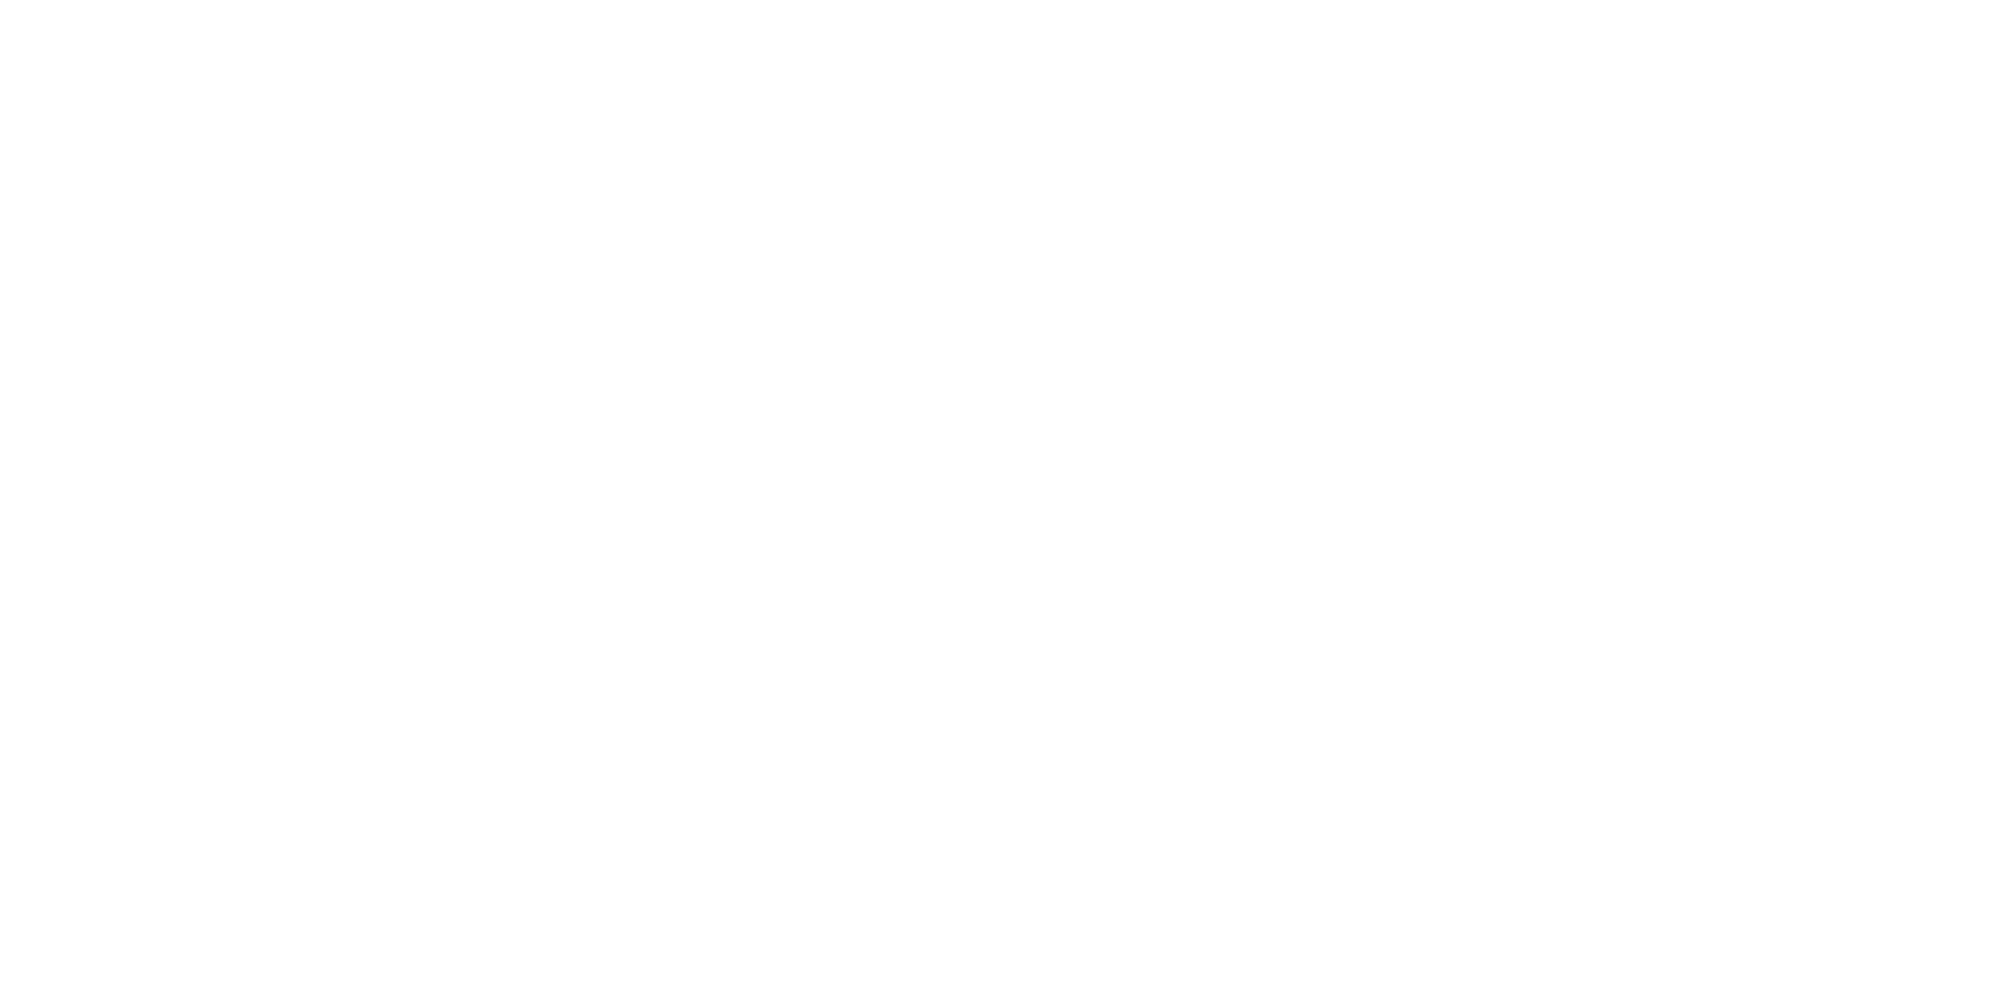 kali linux logo transparant white